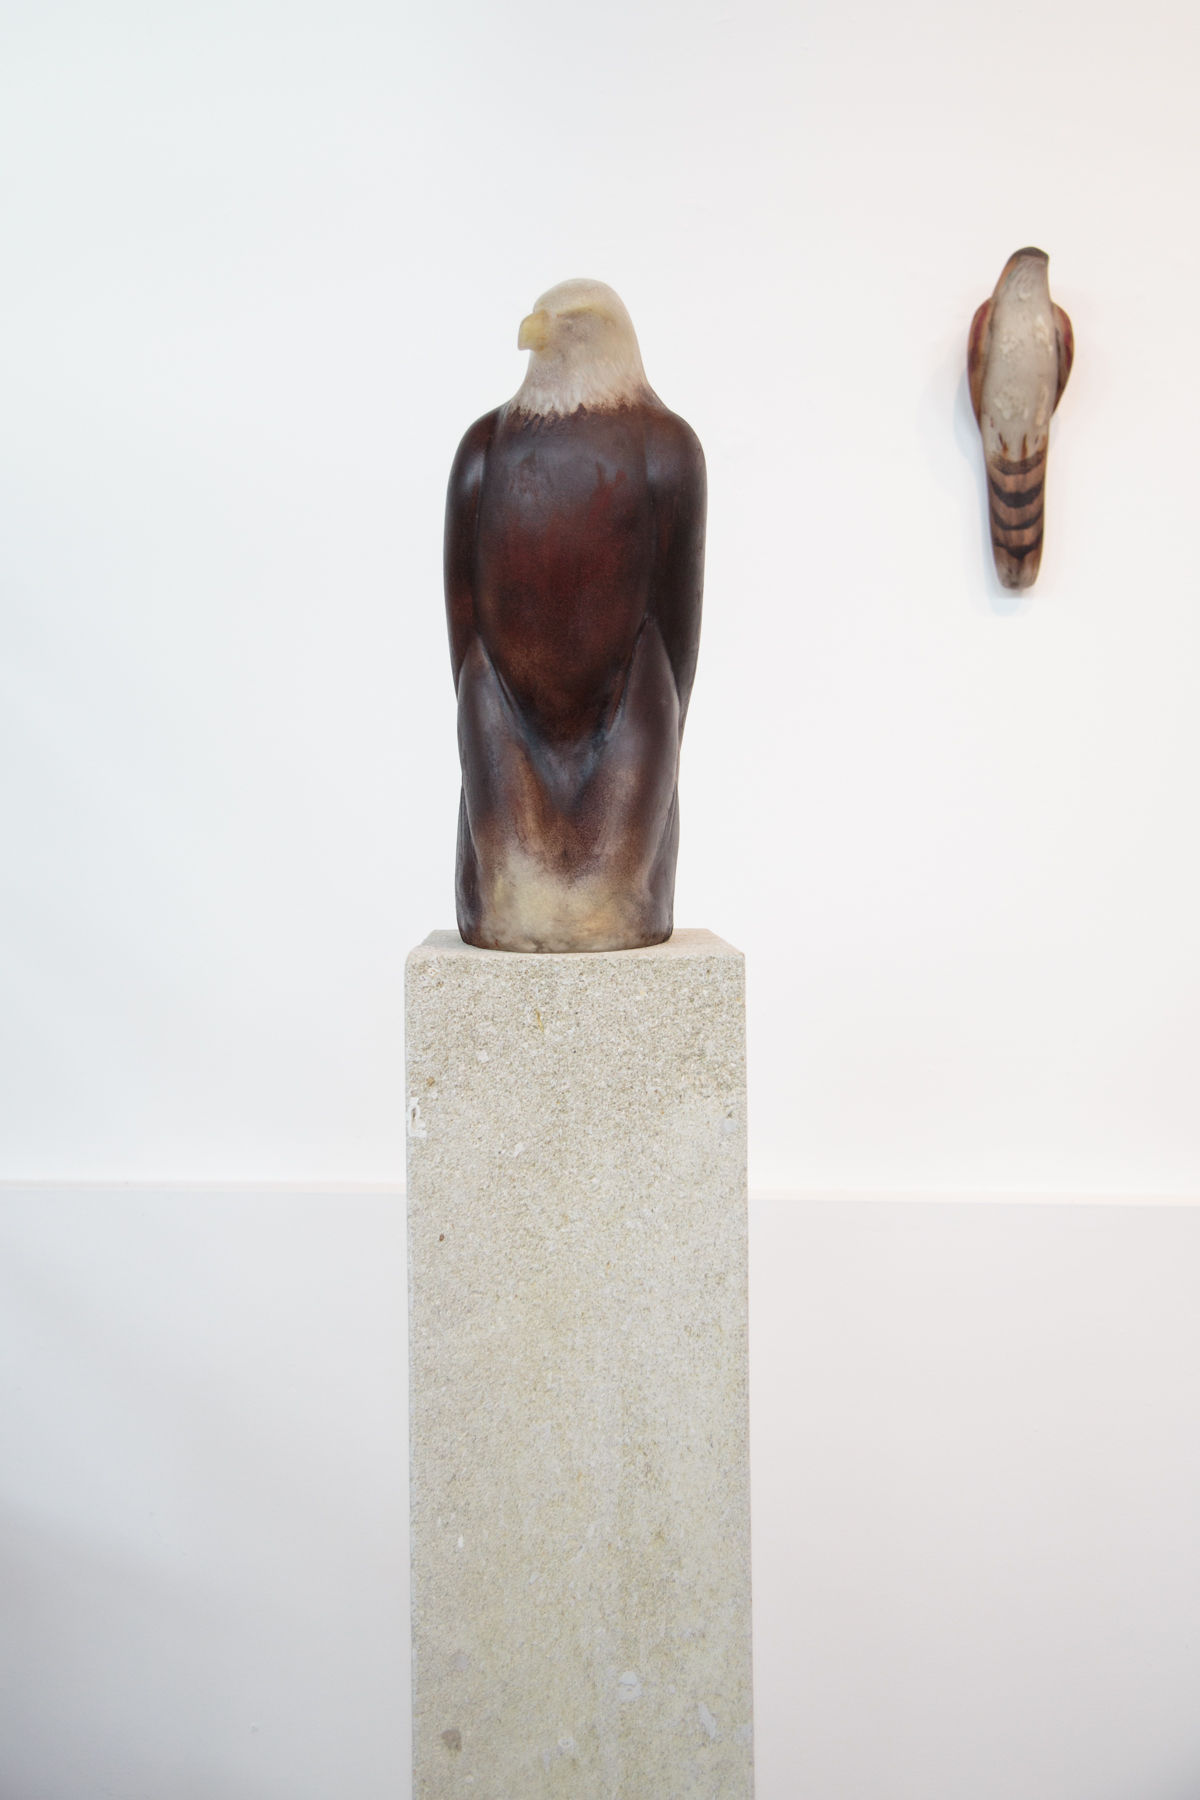  “Eagle,” 2019 Handblown pigmented glass on limestone  62.5 x 8 x 11 inches  